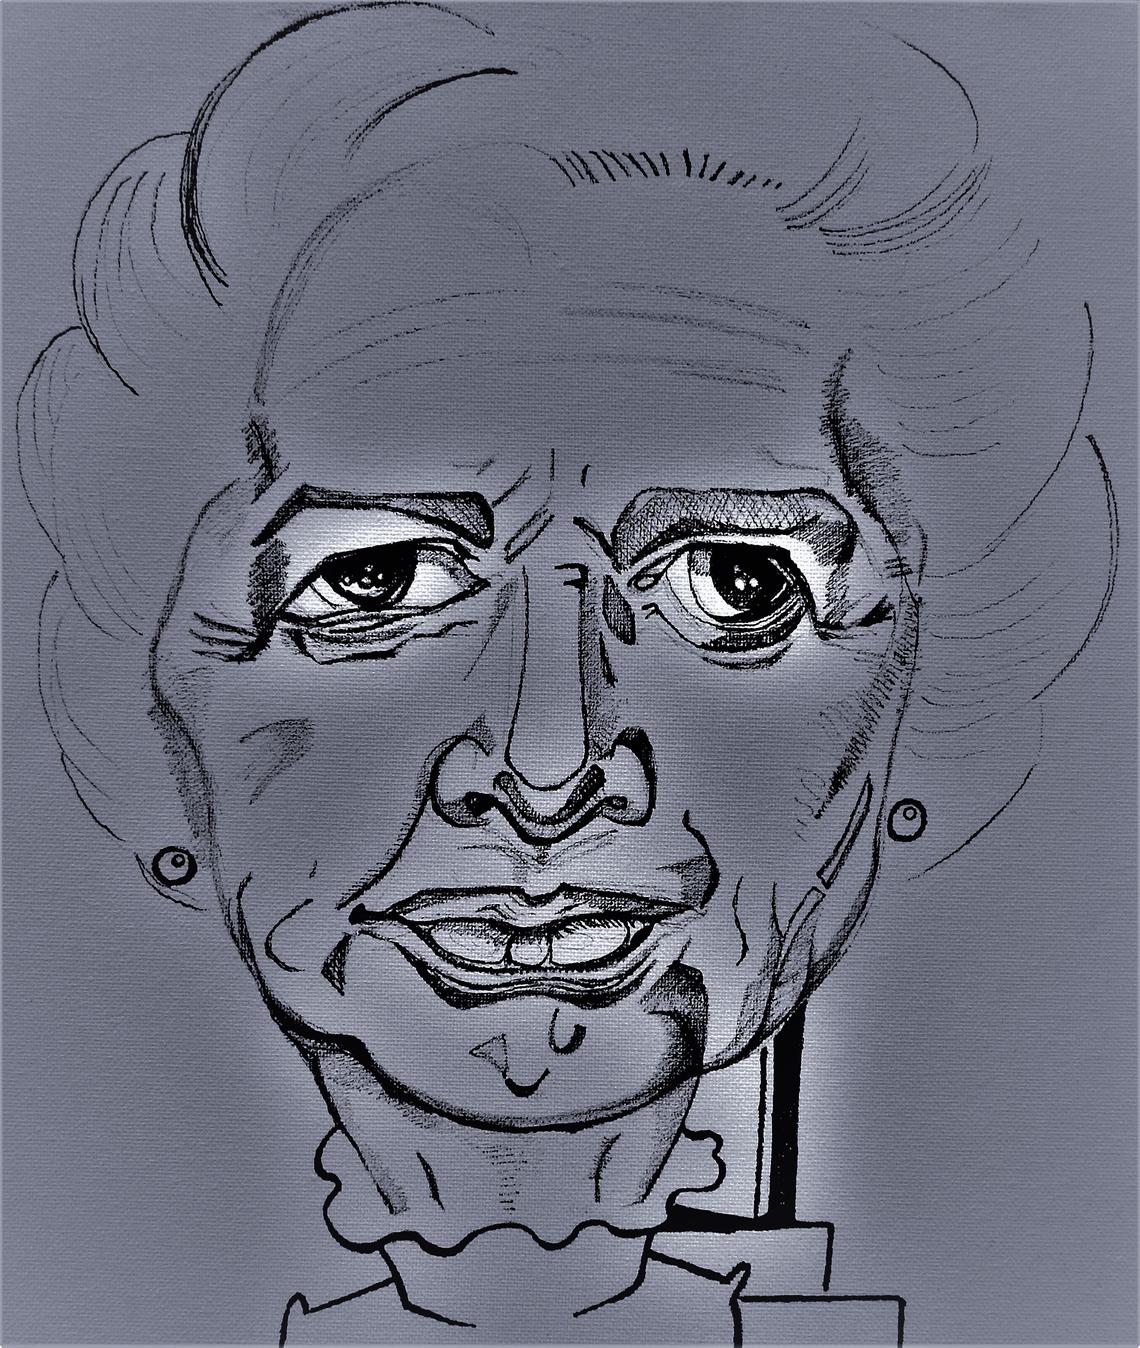 Mrs Thatcher The Iron Lady Caricature Cartoon by Kitty Pigfish - Pigfish - Kitty Pigfish Cartoons